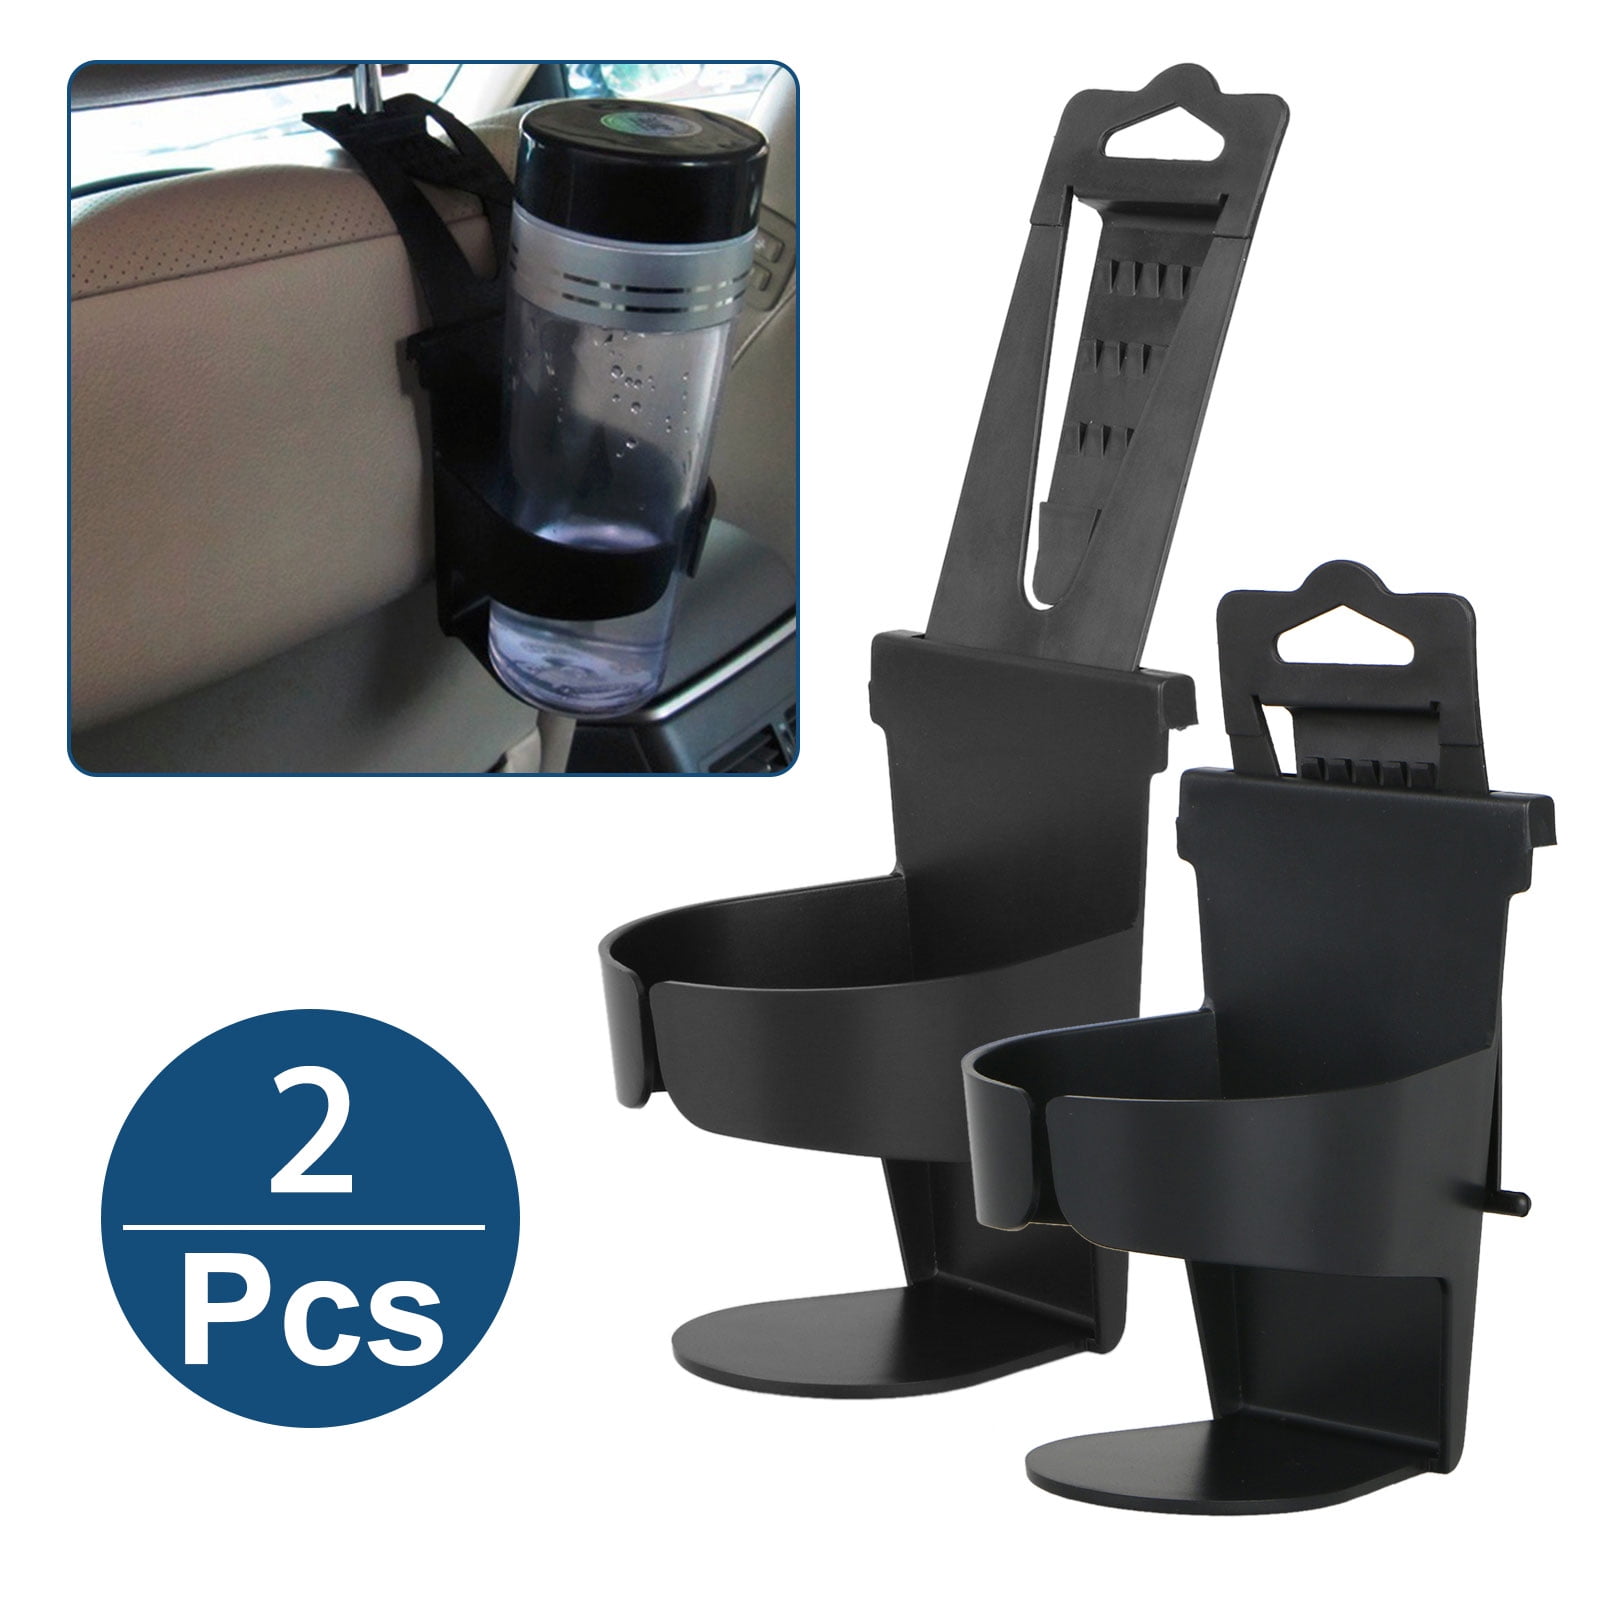 TSV Car Cup Holder Expander Adapter Base, 2 in 1 Adjustable Organizer Work  with Bottle Coffee Drinks, Multifunctional Car Drink Holder Storage, Black  